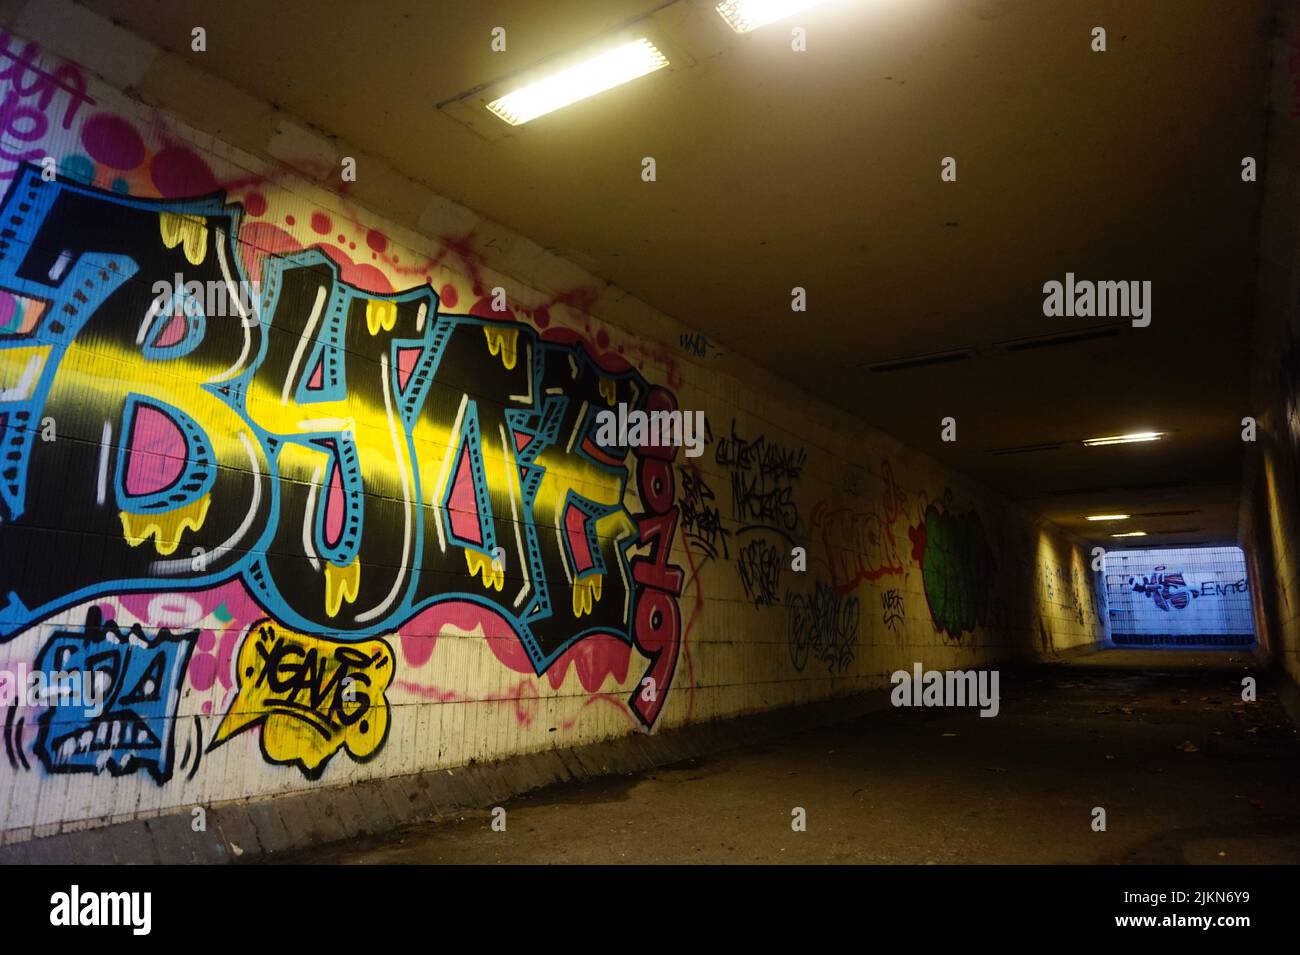 Stretford subways graffiti wall, near Stretford Precinct, Manchester, UK Stock Photo